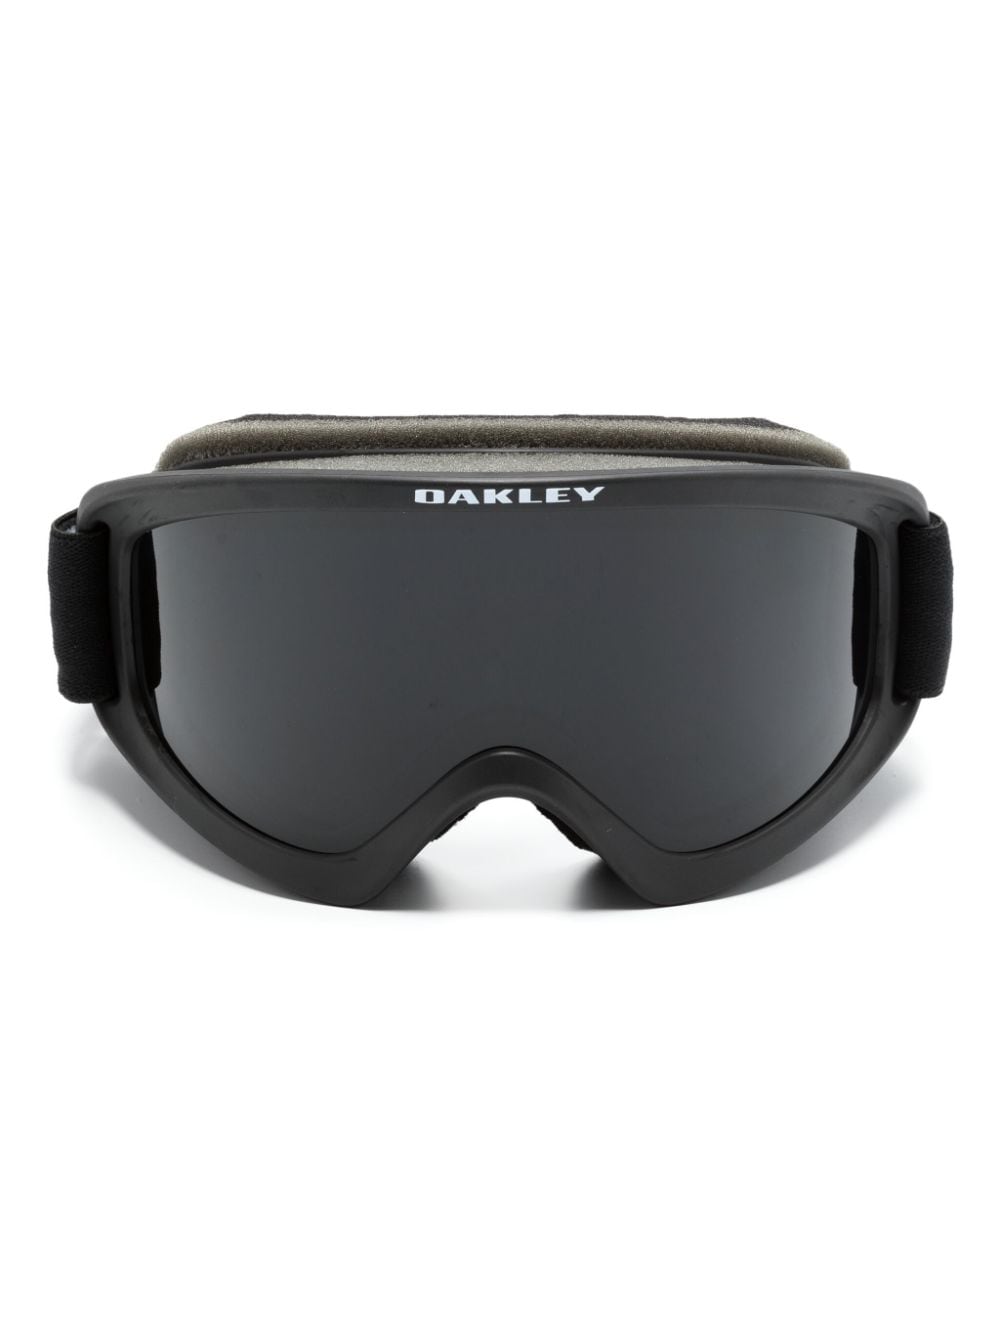 Oakley Matte skibril met O-montuur Zwart